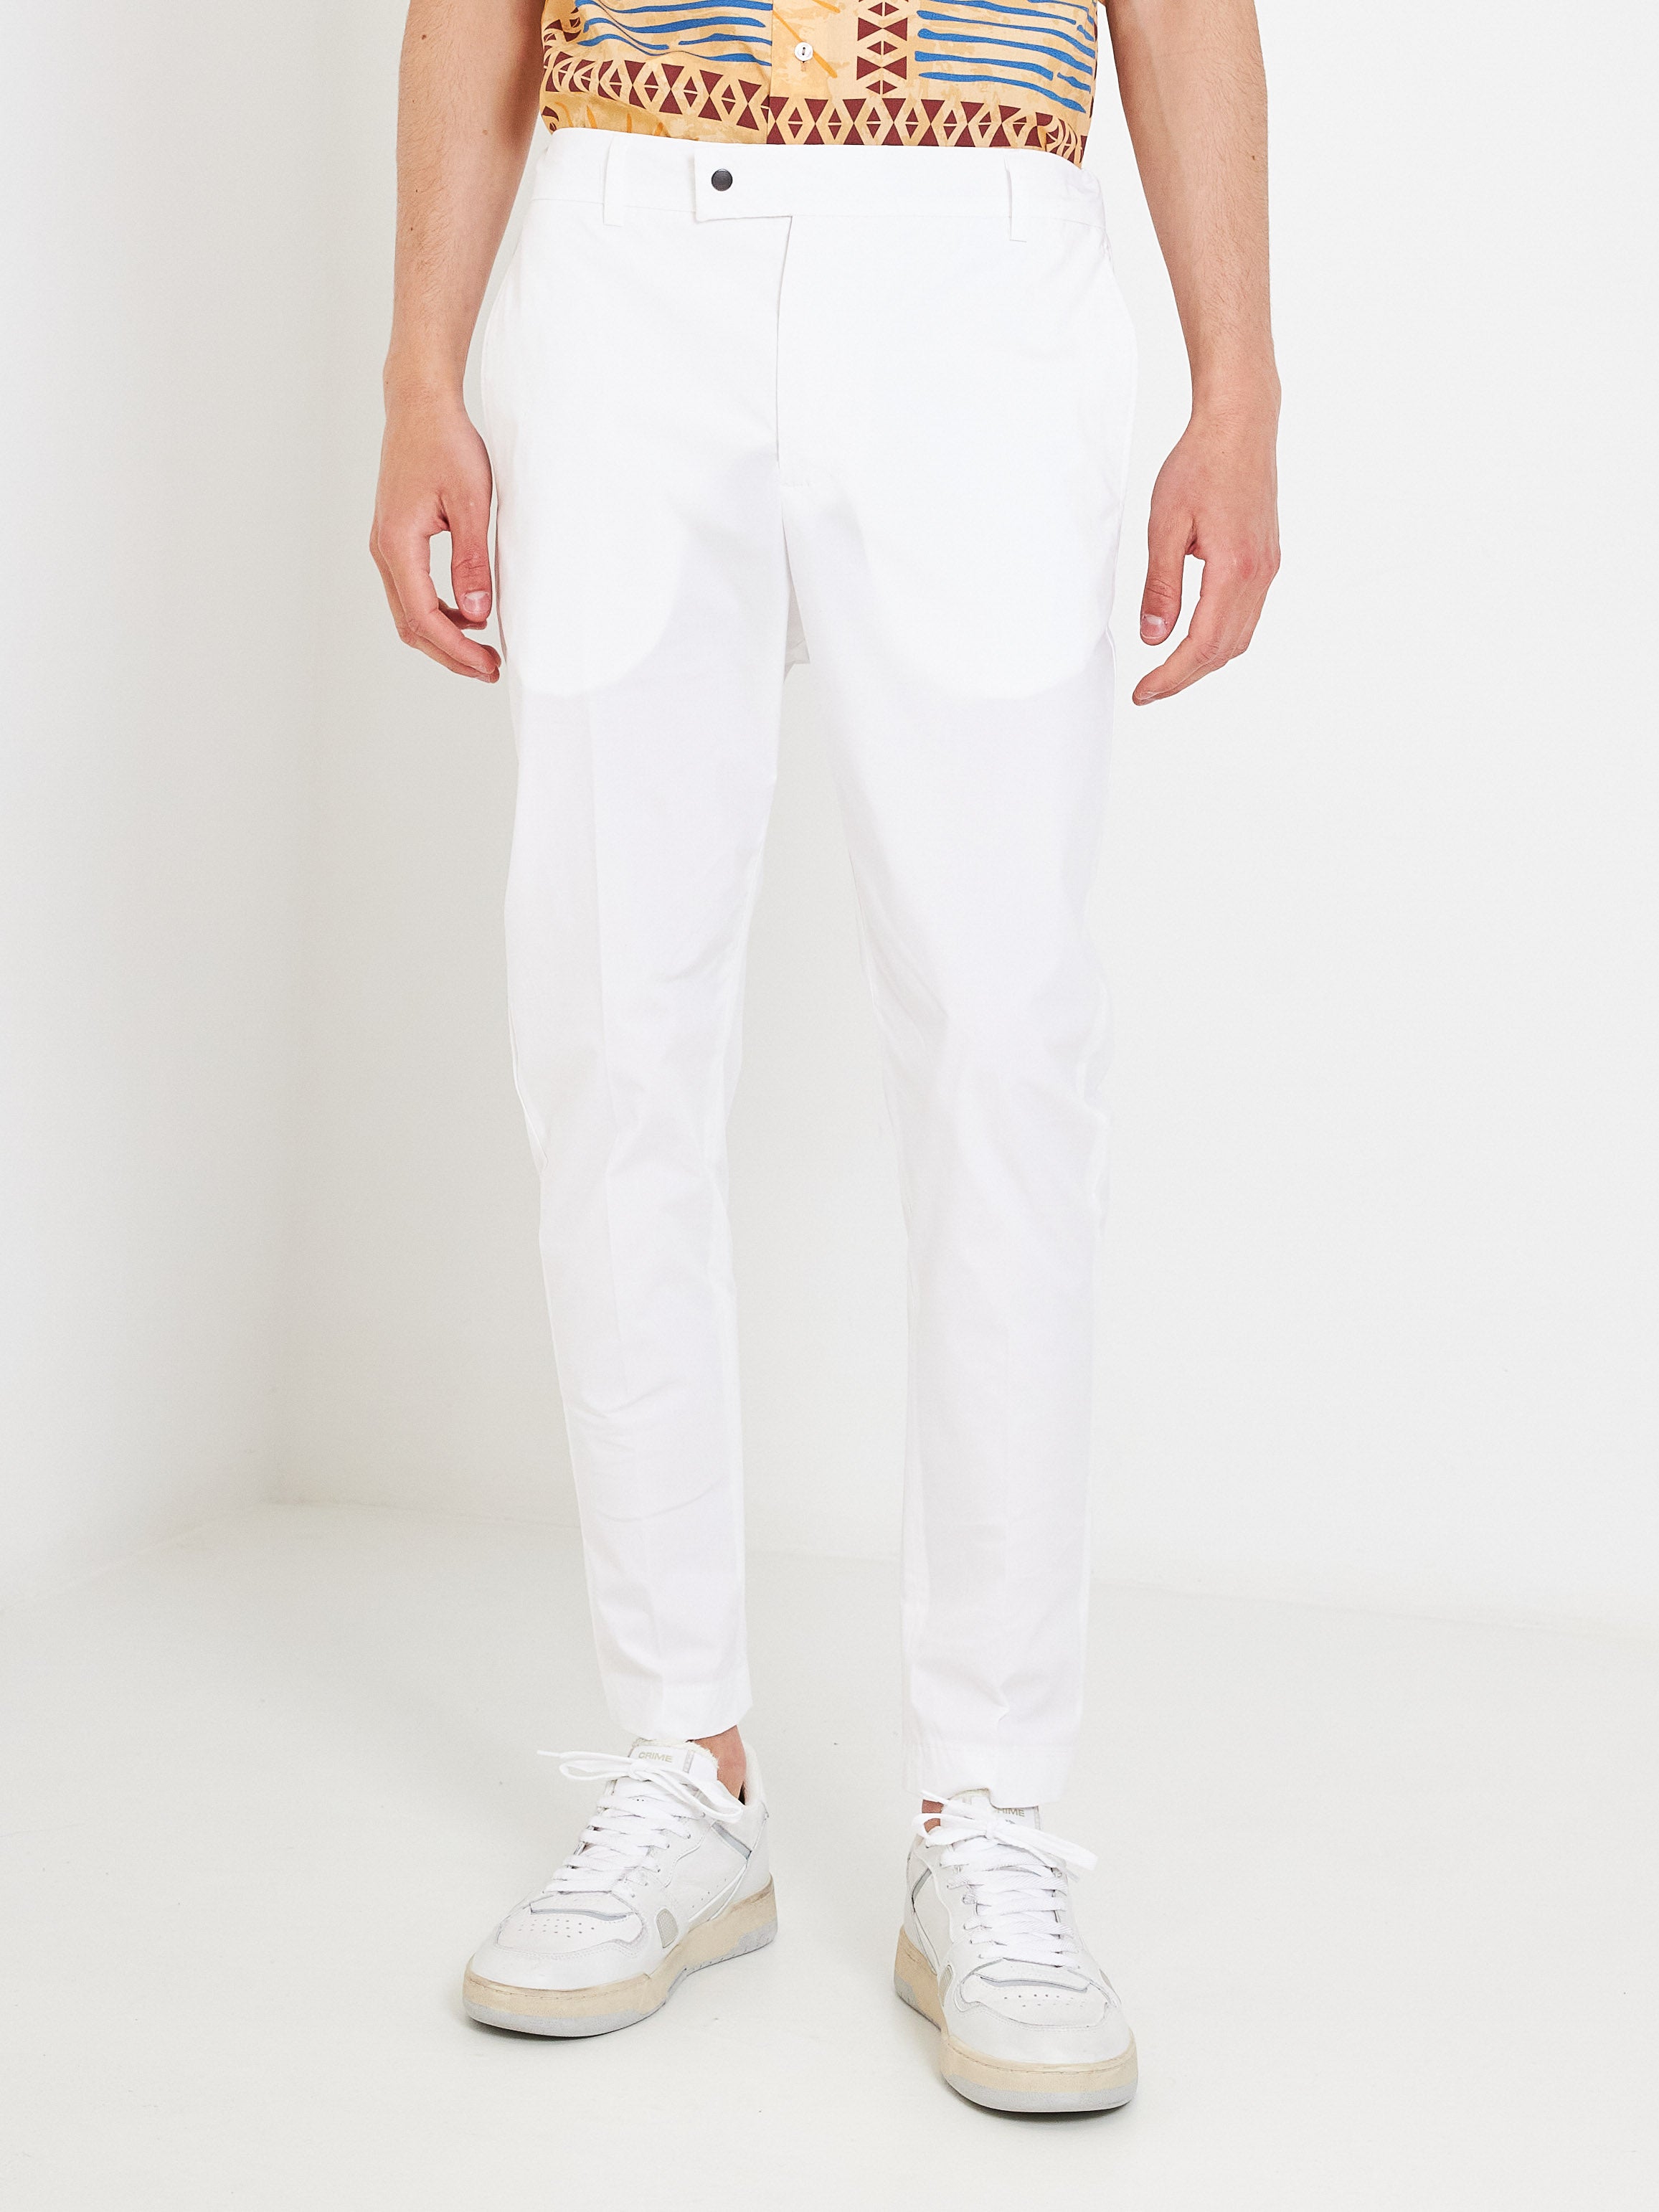 White Over pantaloni bianco